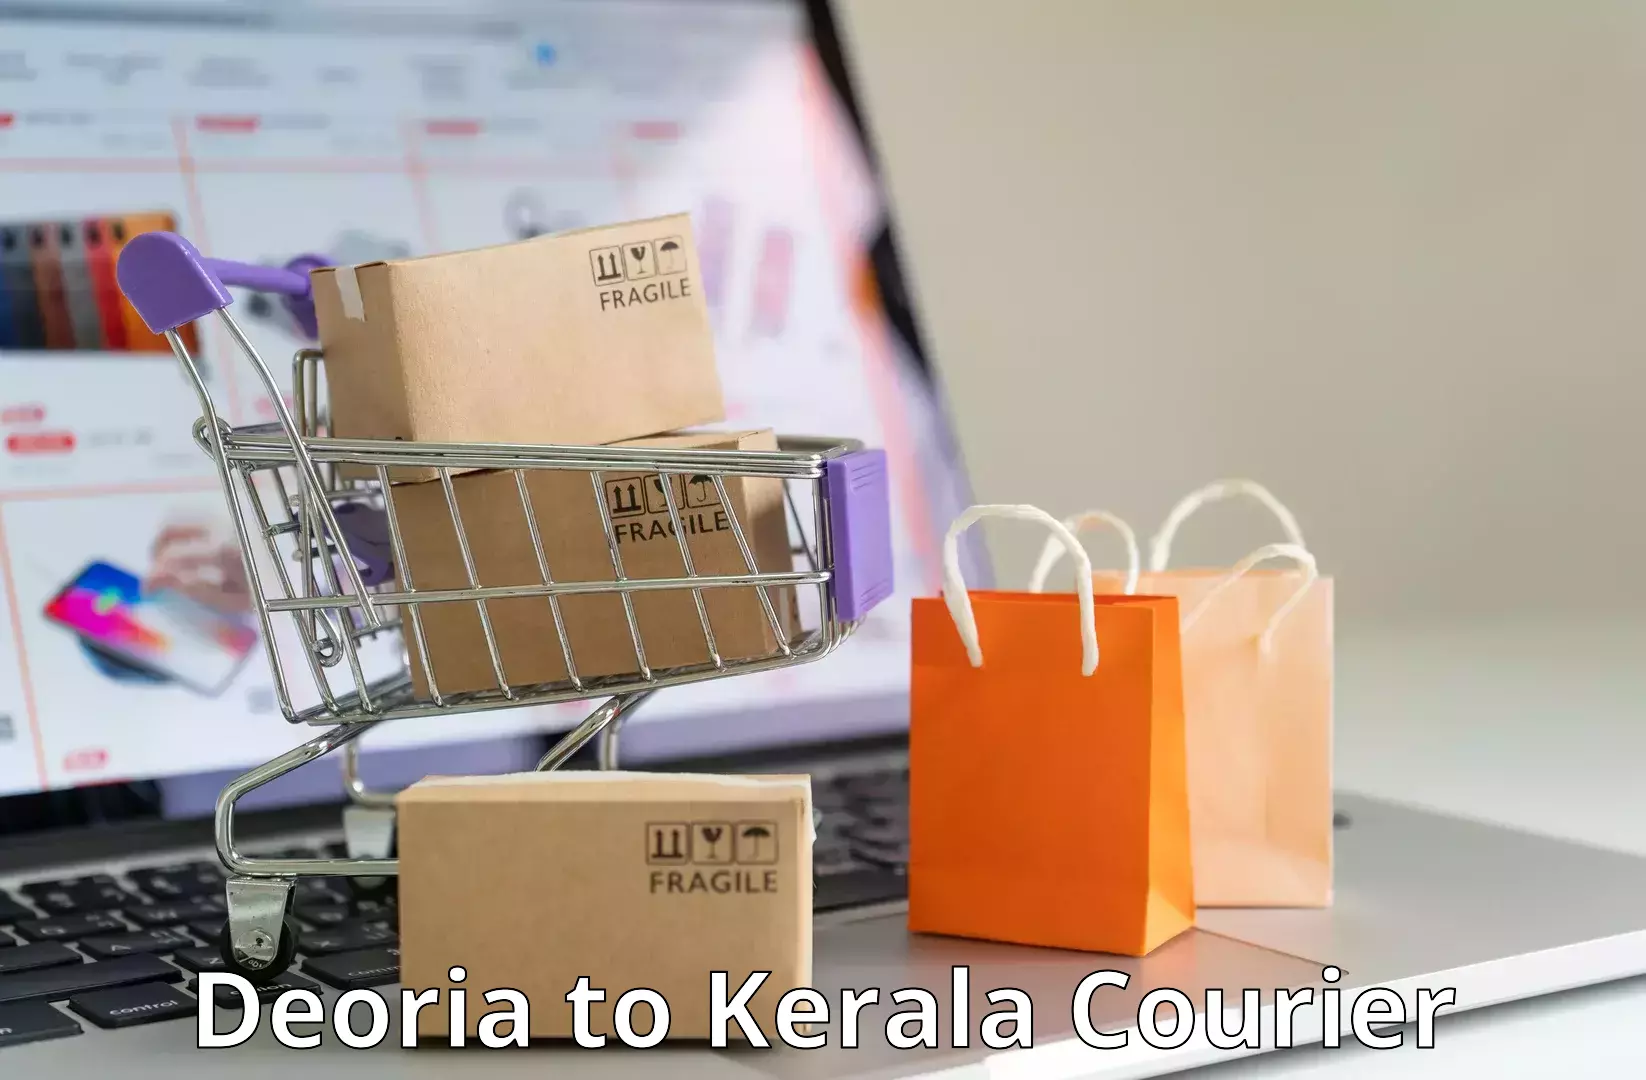 Doorstep delivery service Deoria to Cochin Port Kochi